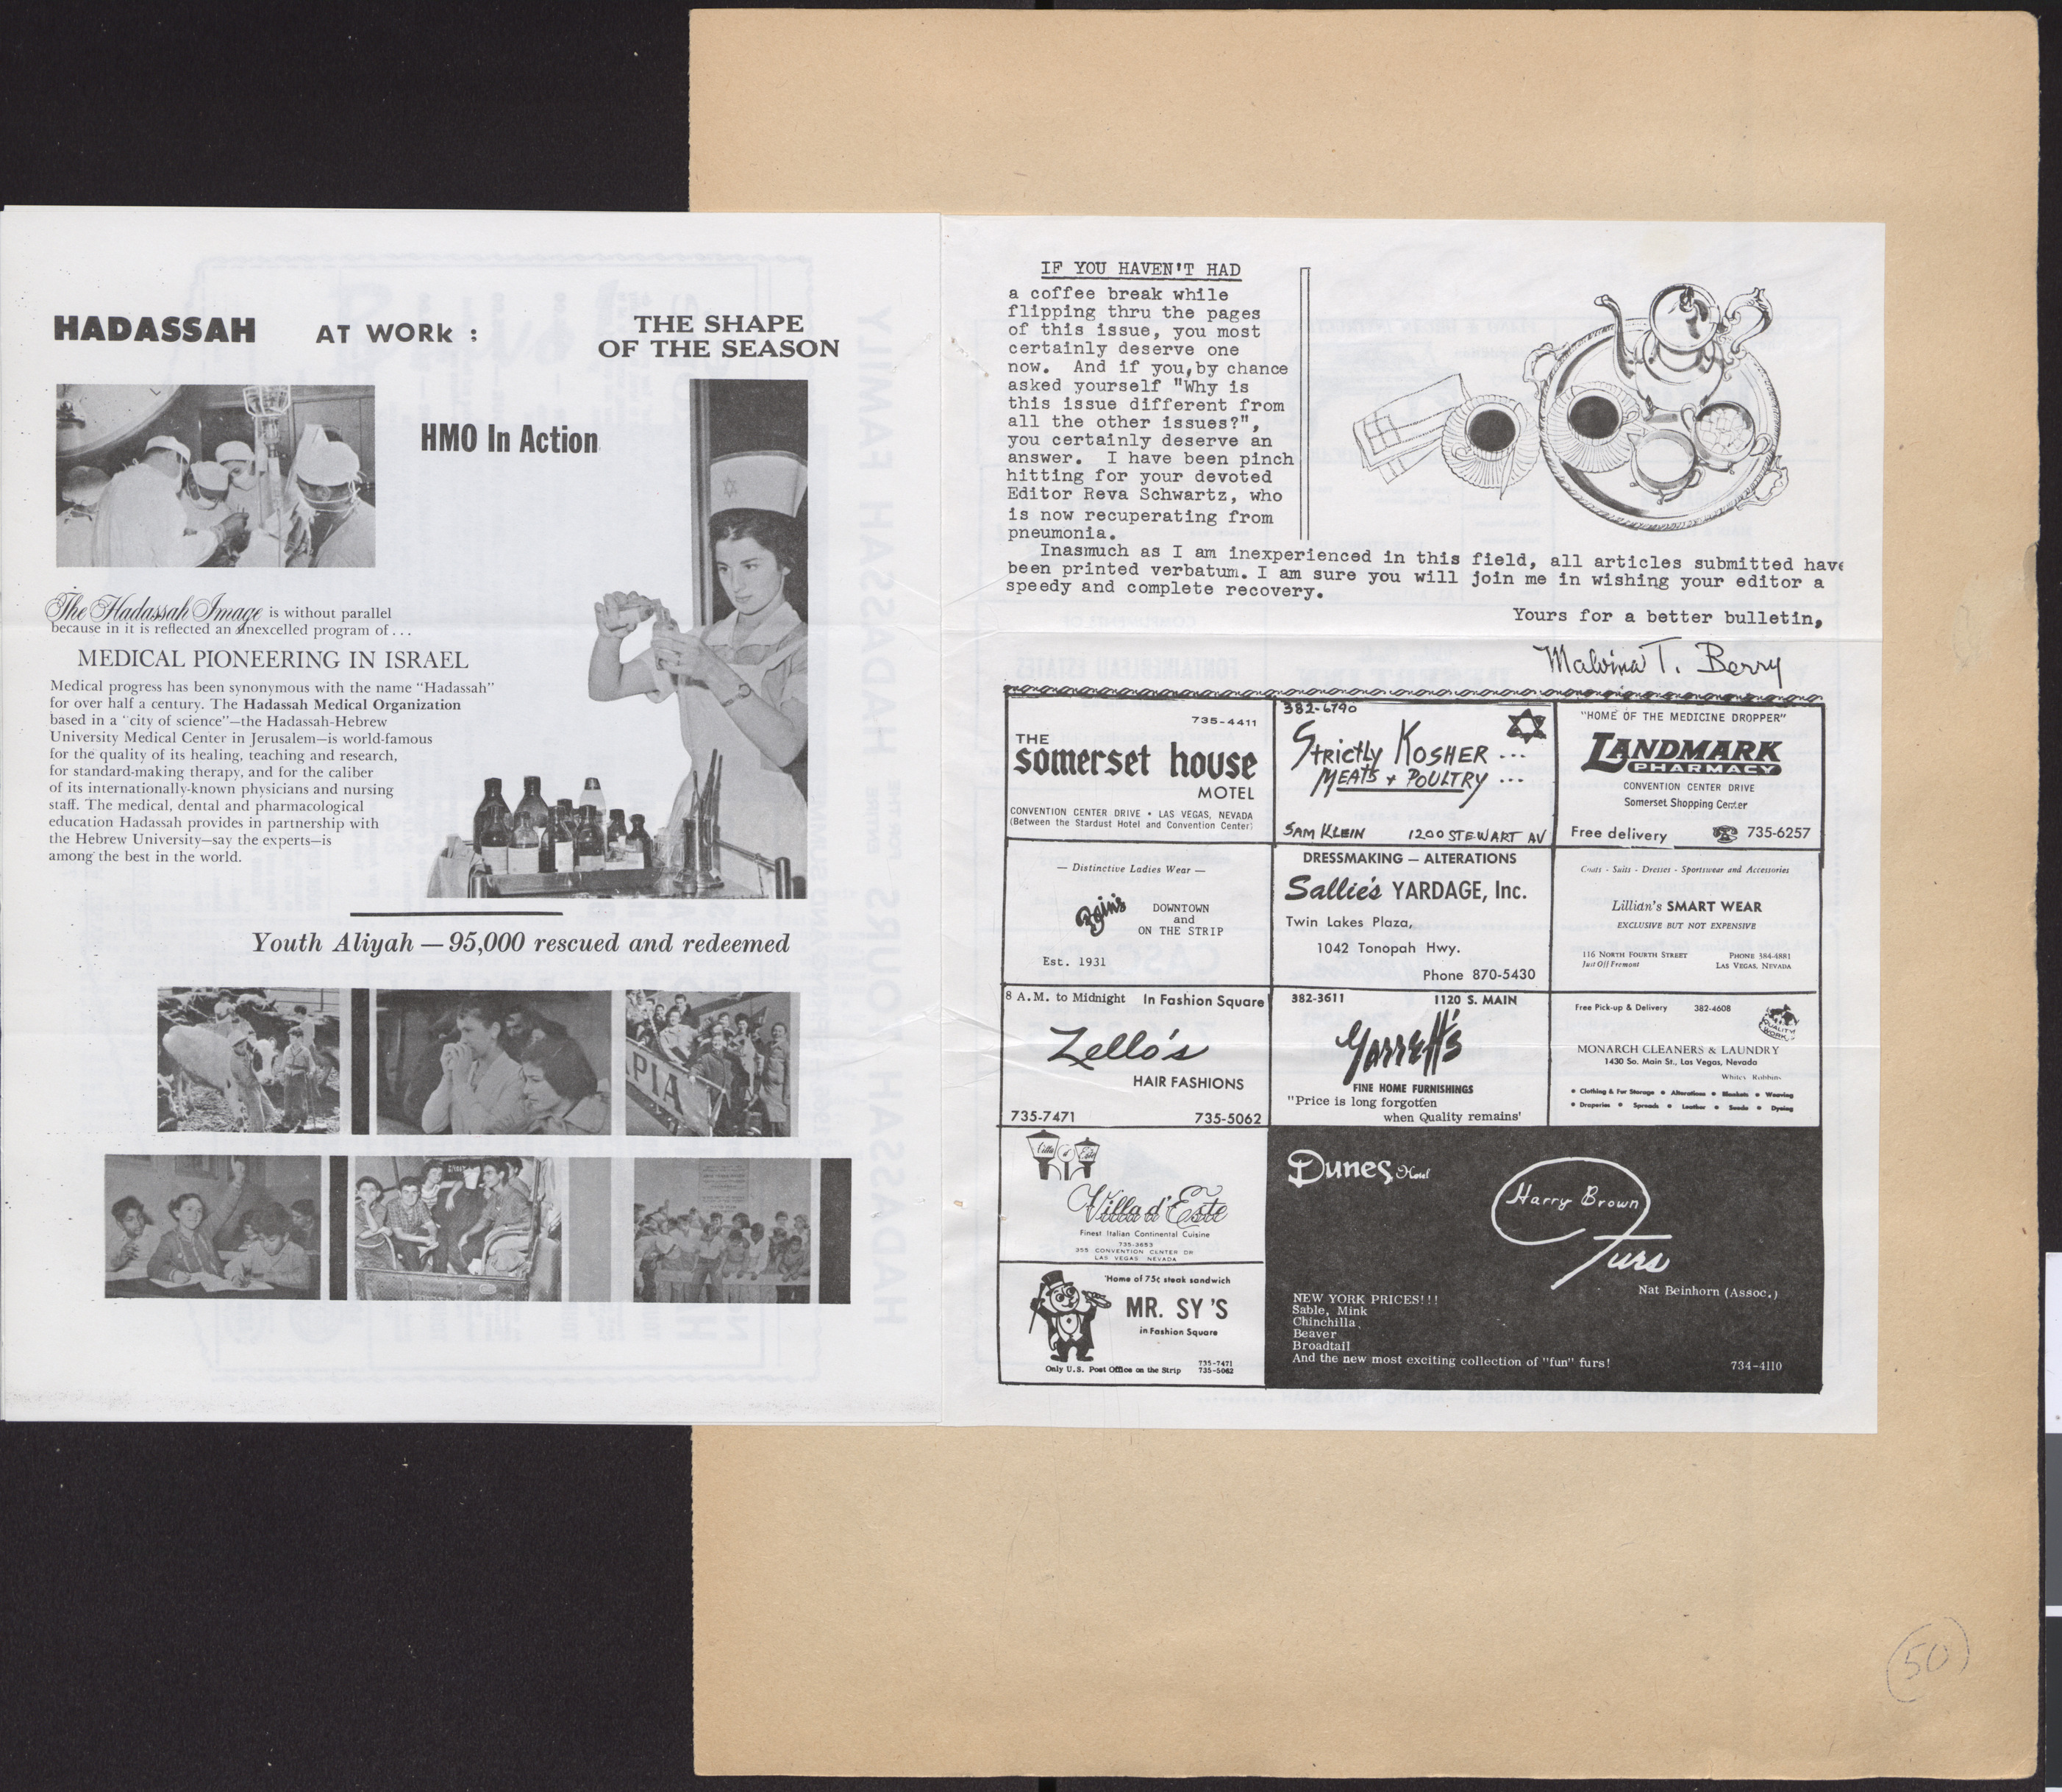 Hadassah Las Vegas Chapter newsletter, January/February 1966, page 8-9